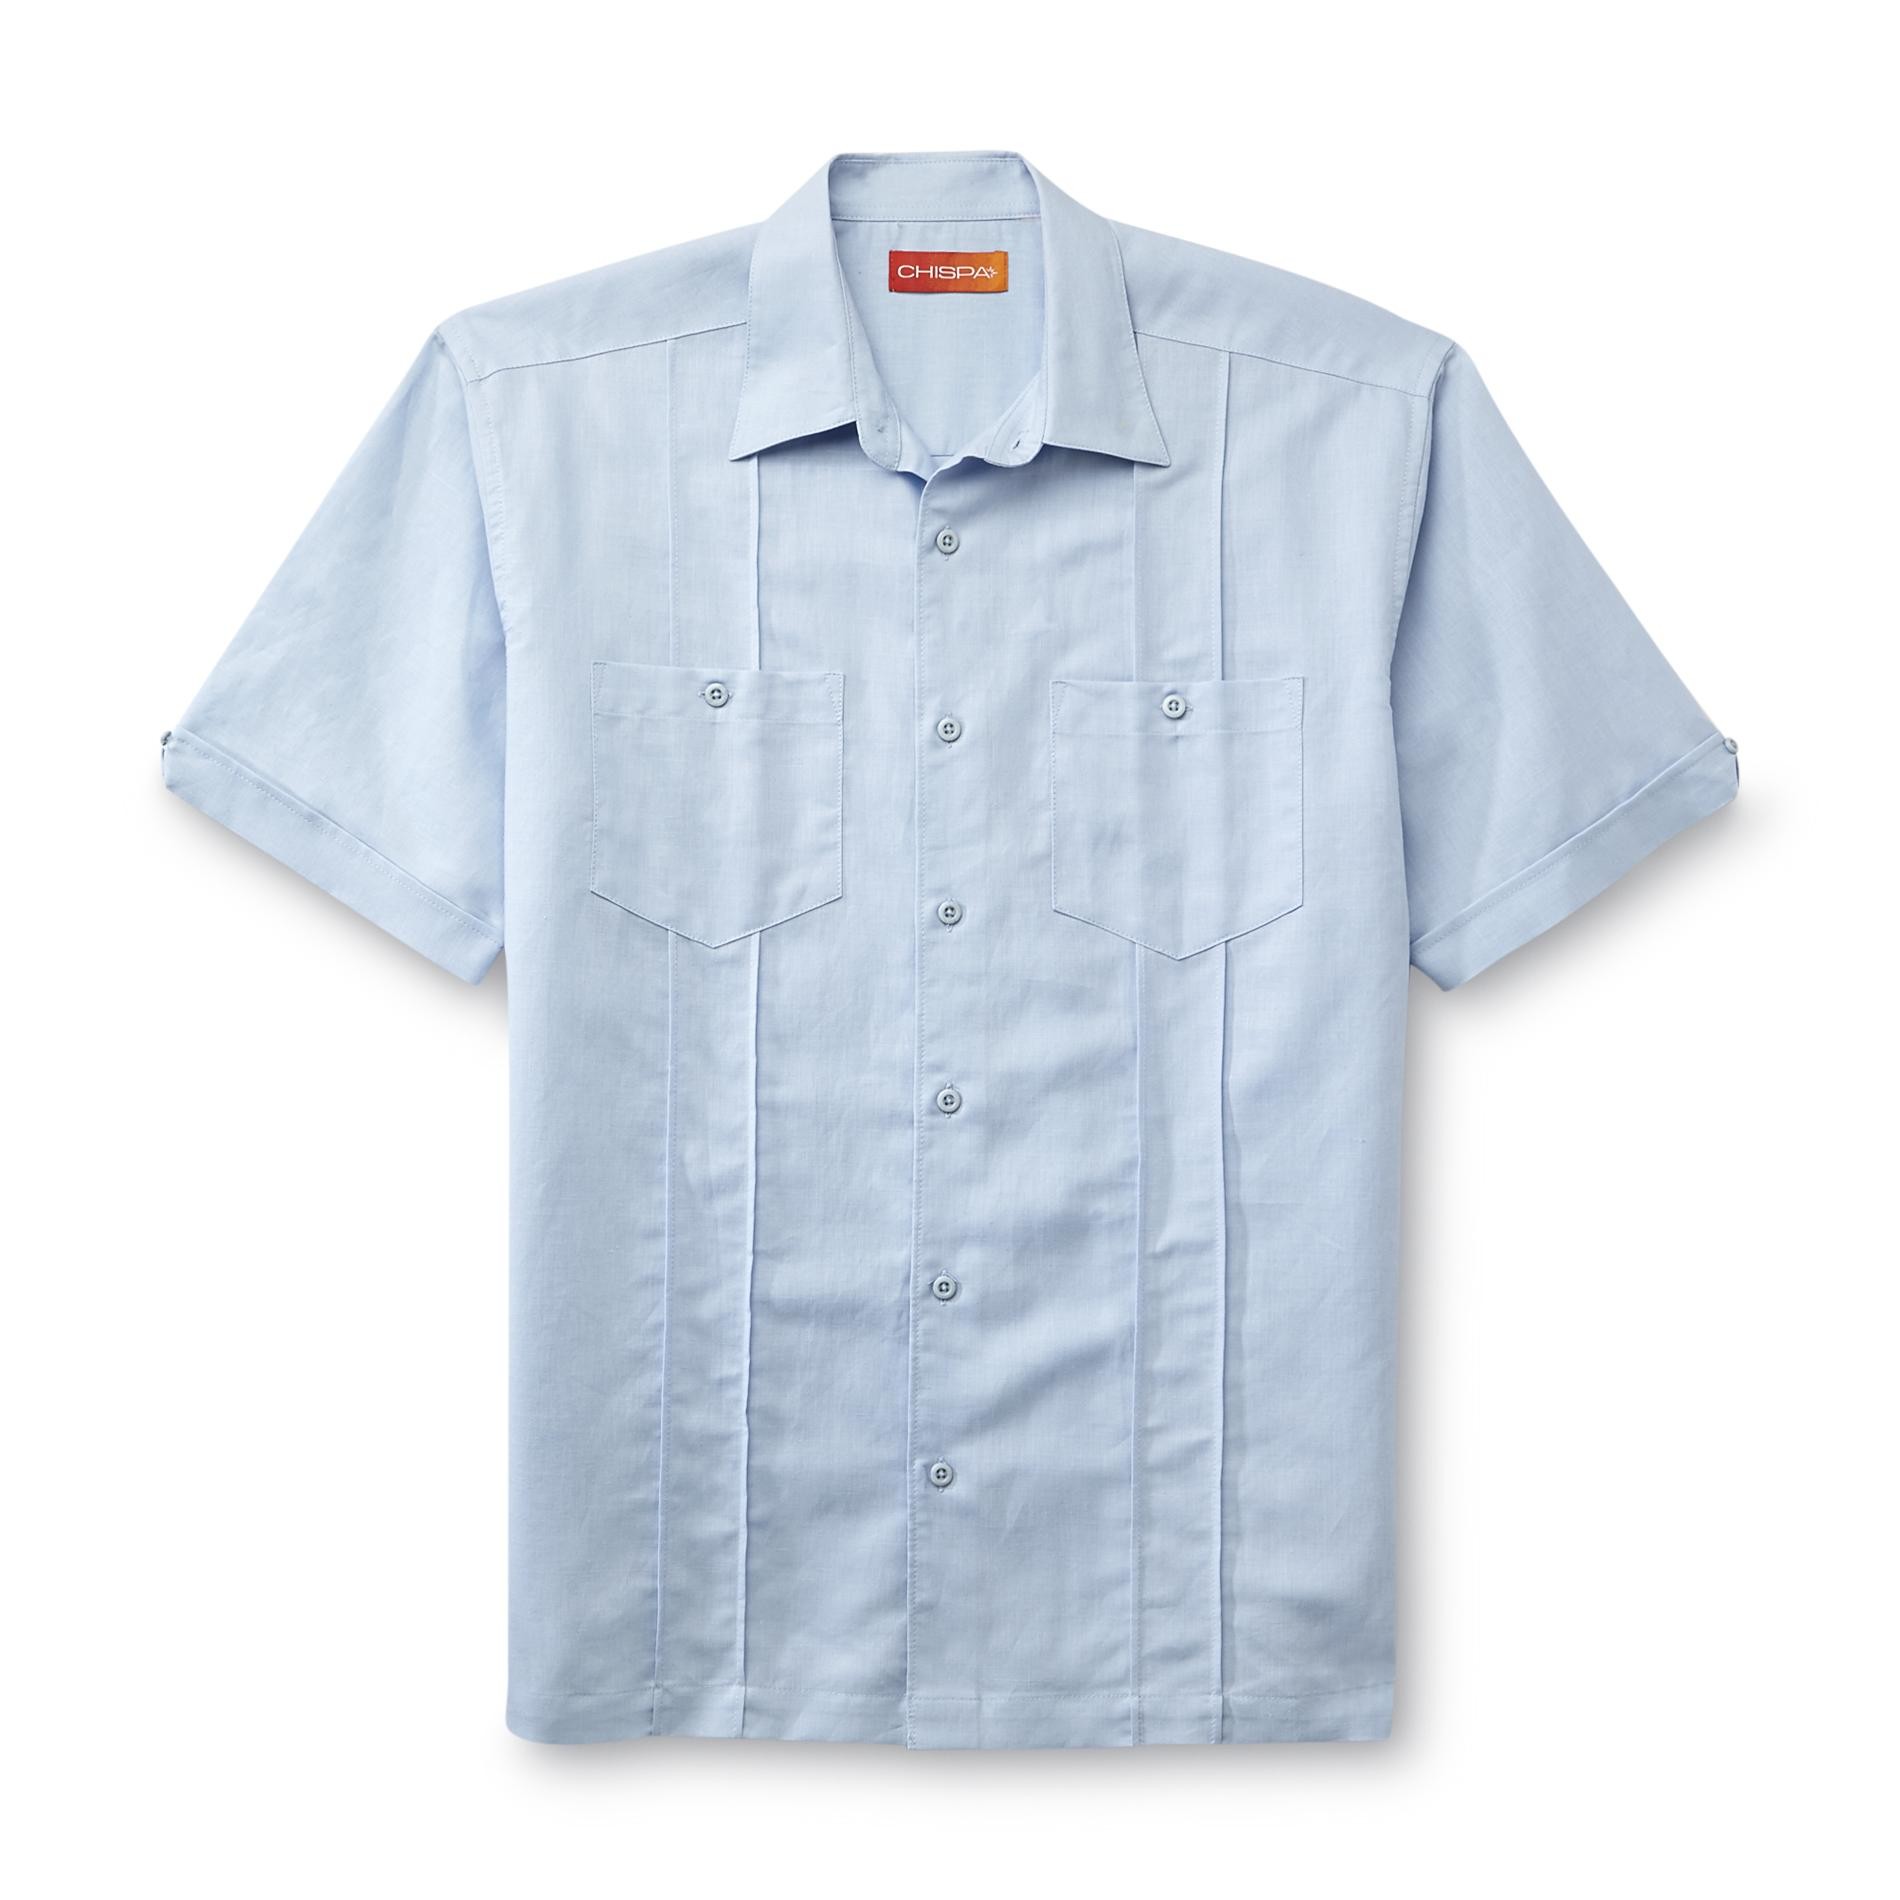 Chispa Men's Collared Short-Sleeve Shirt